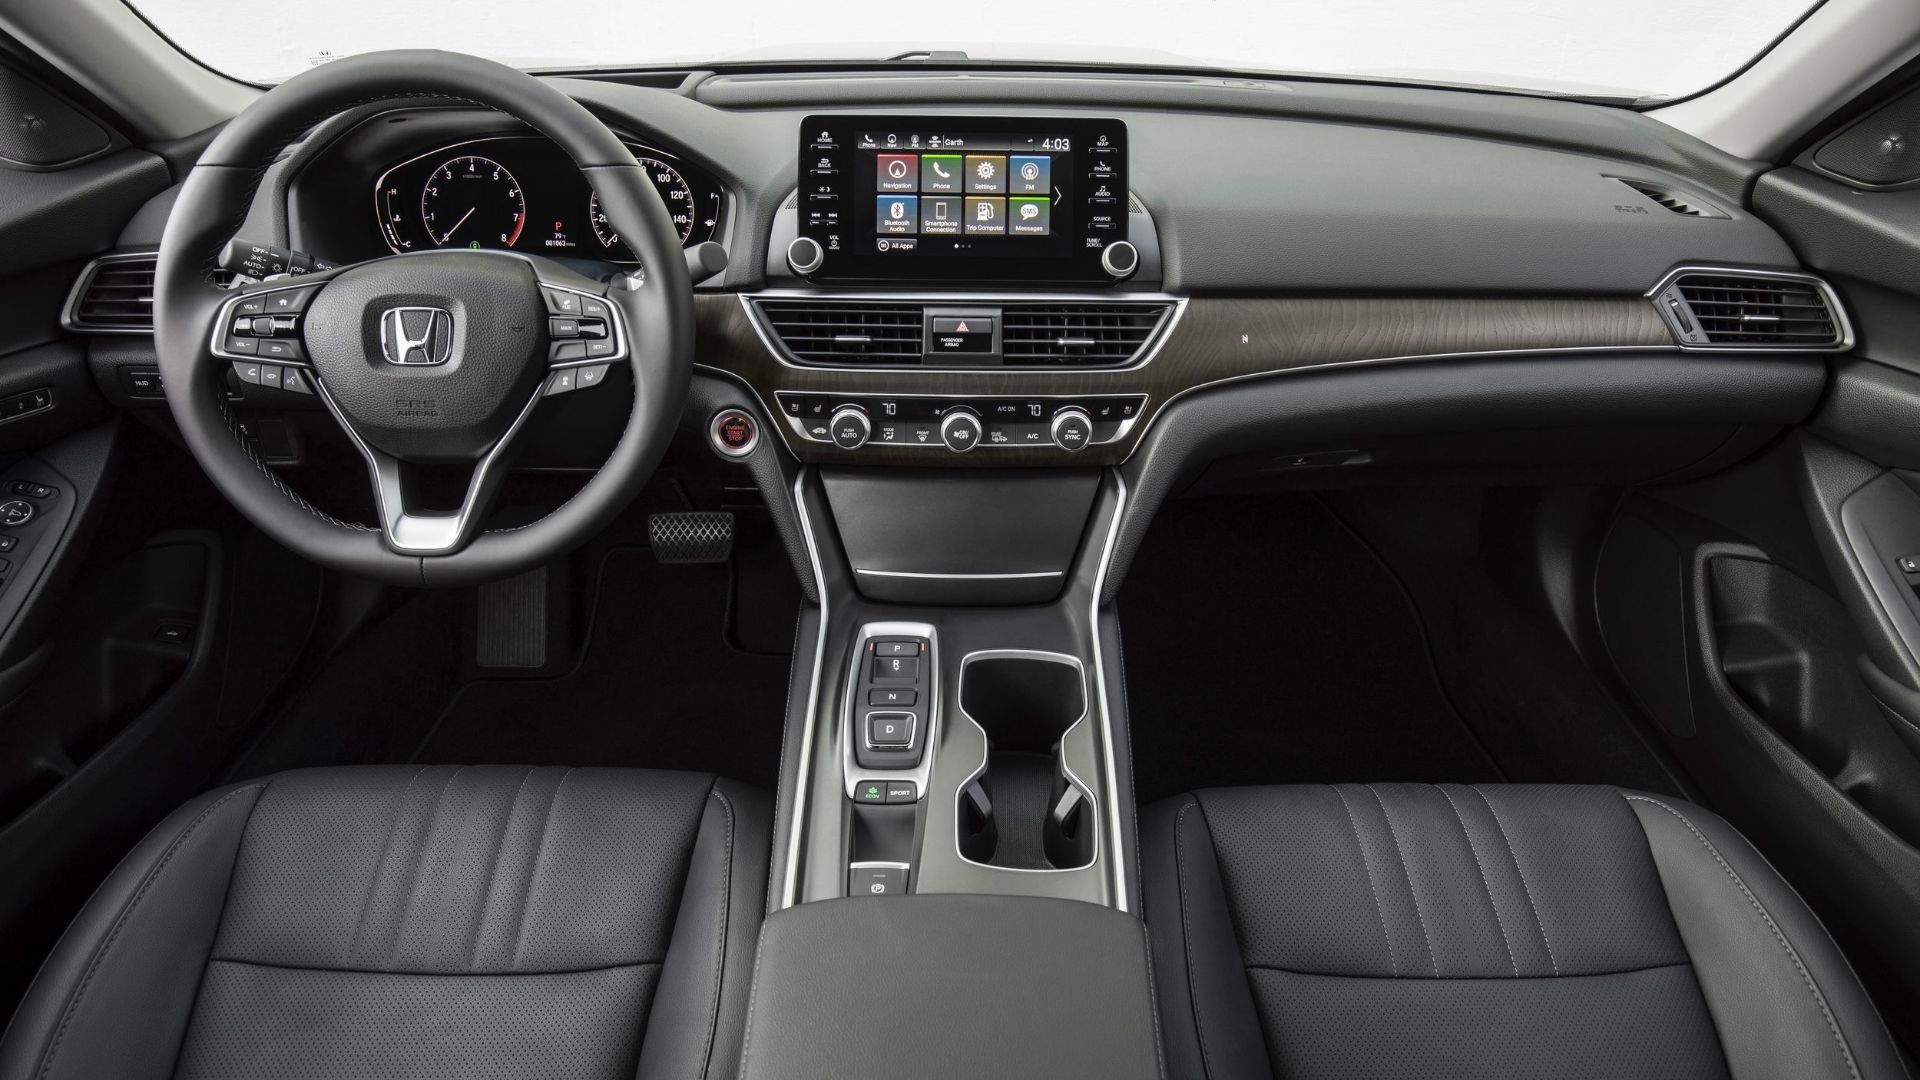 2019 Honda Accord - interior 2019 Honda Accord